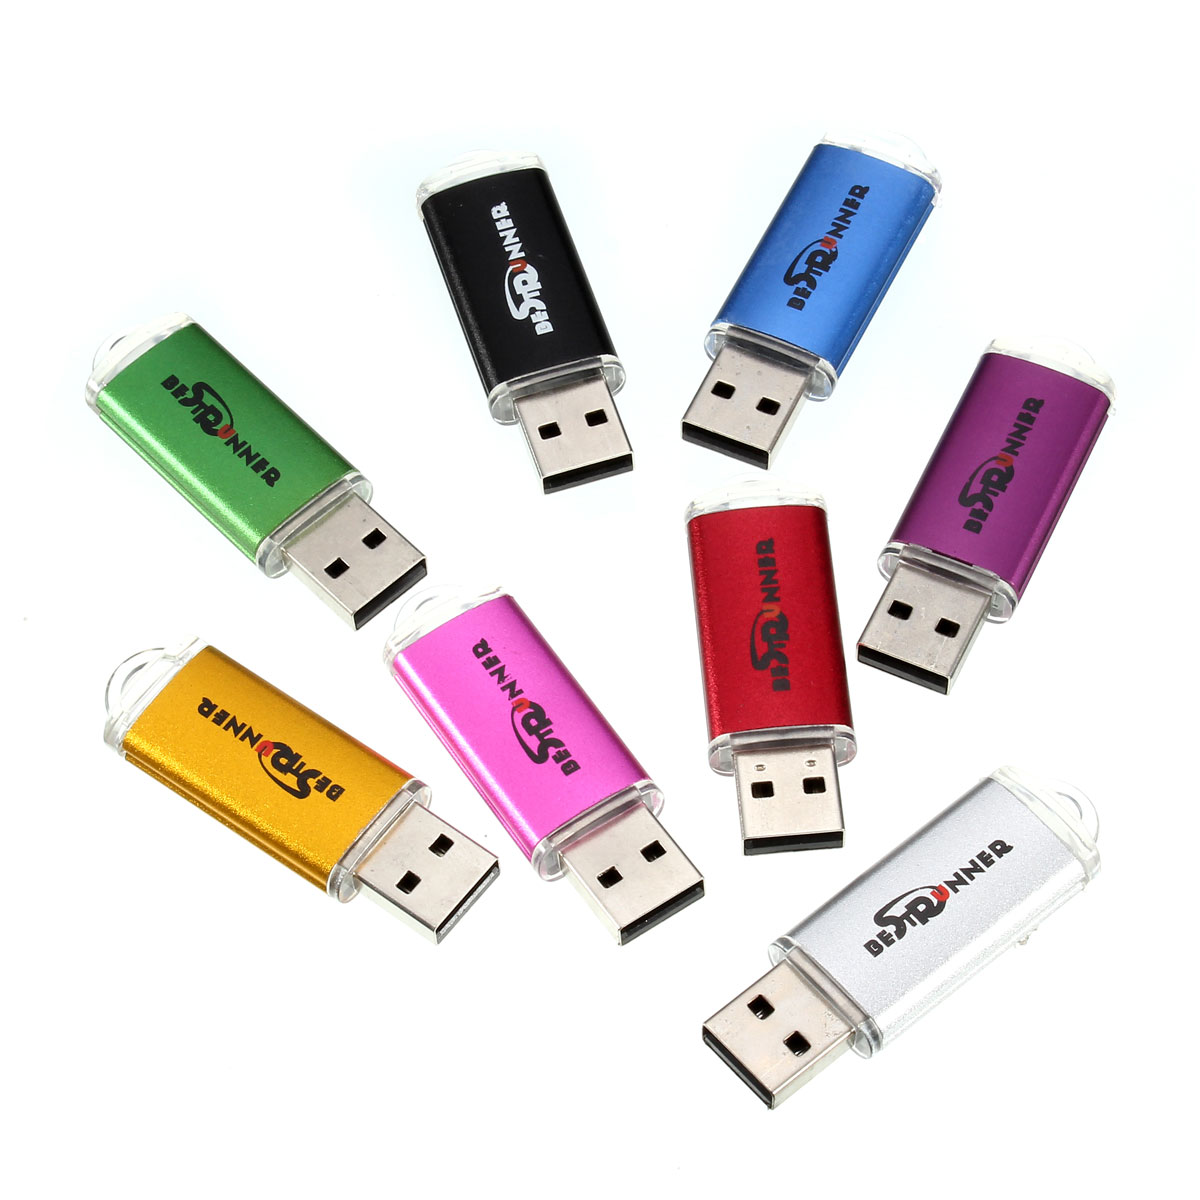 Bestrunner-Multi-Color-Portable-USB-20-1GB960M-Pendrive-USB-Disk-for-Macbook-Laptop-PC-1723018-5